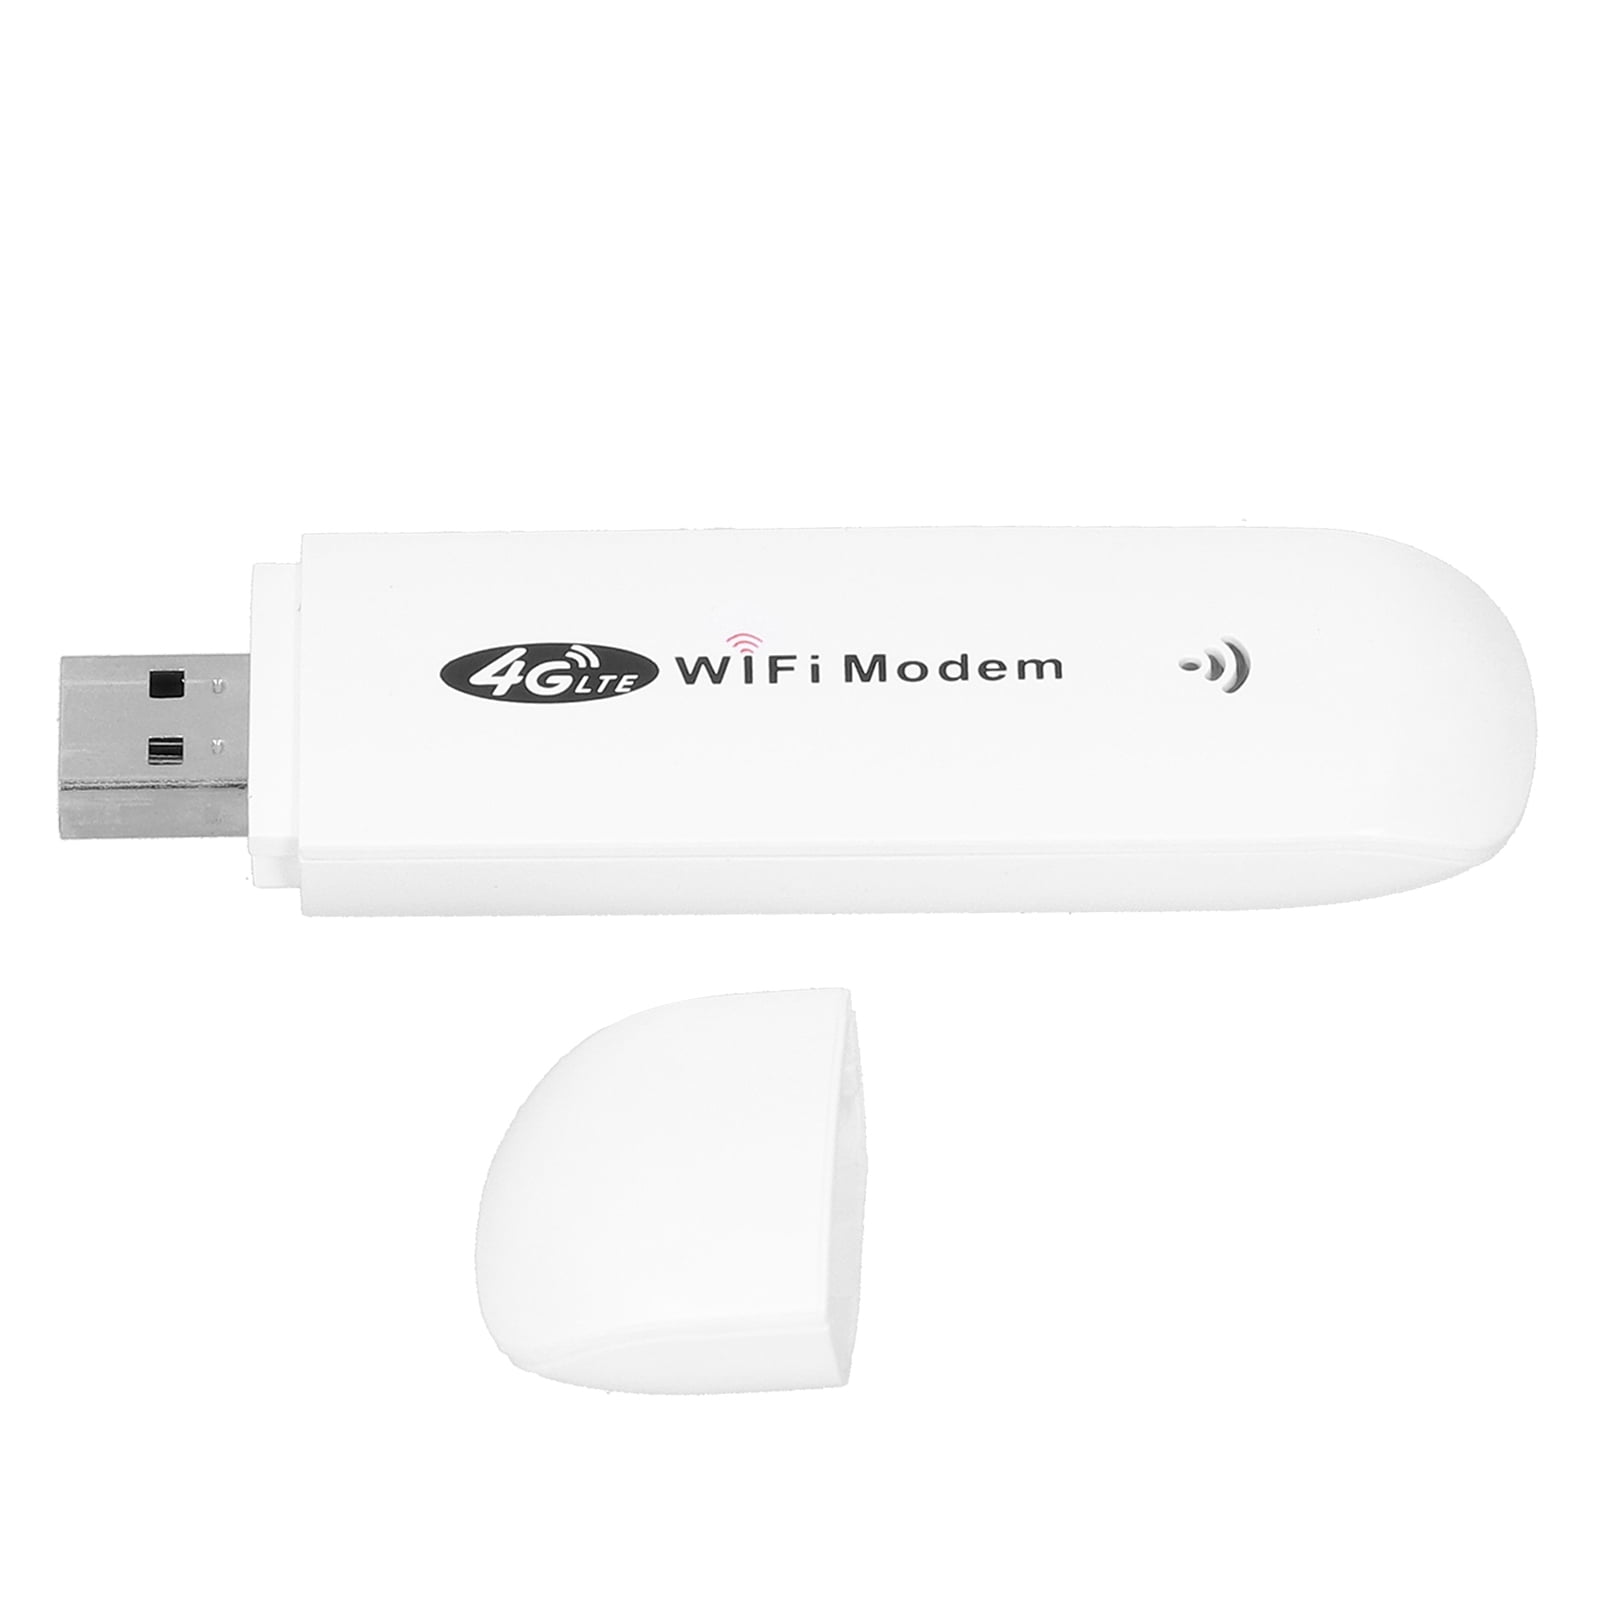 WiFi Modem Dongle 4G LTE TDD FDD GSM Car Mini Wireless Router With SIM Card Slot - Walmart.com